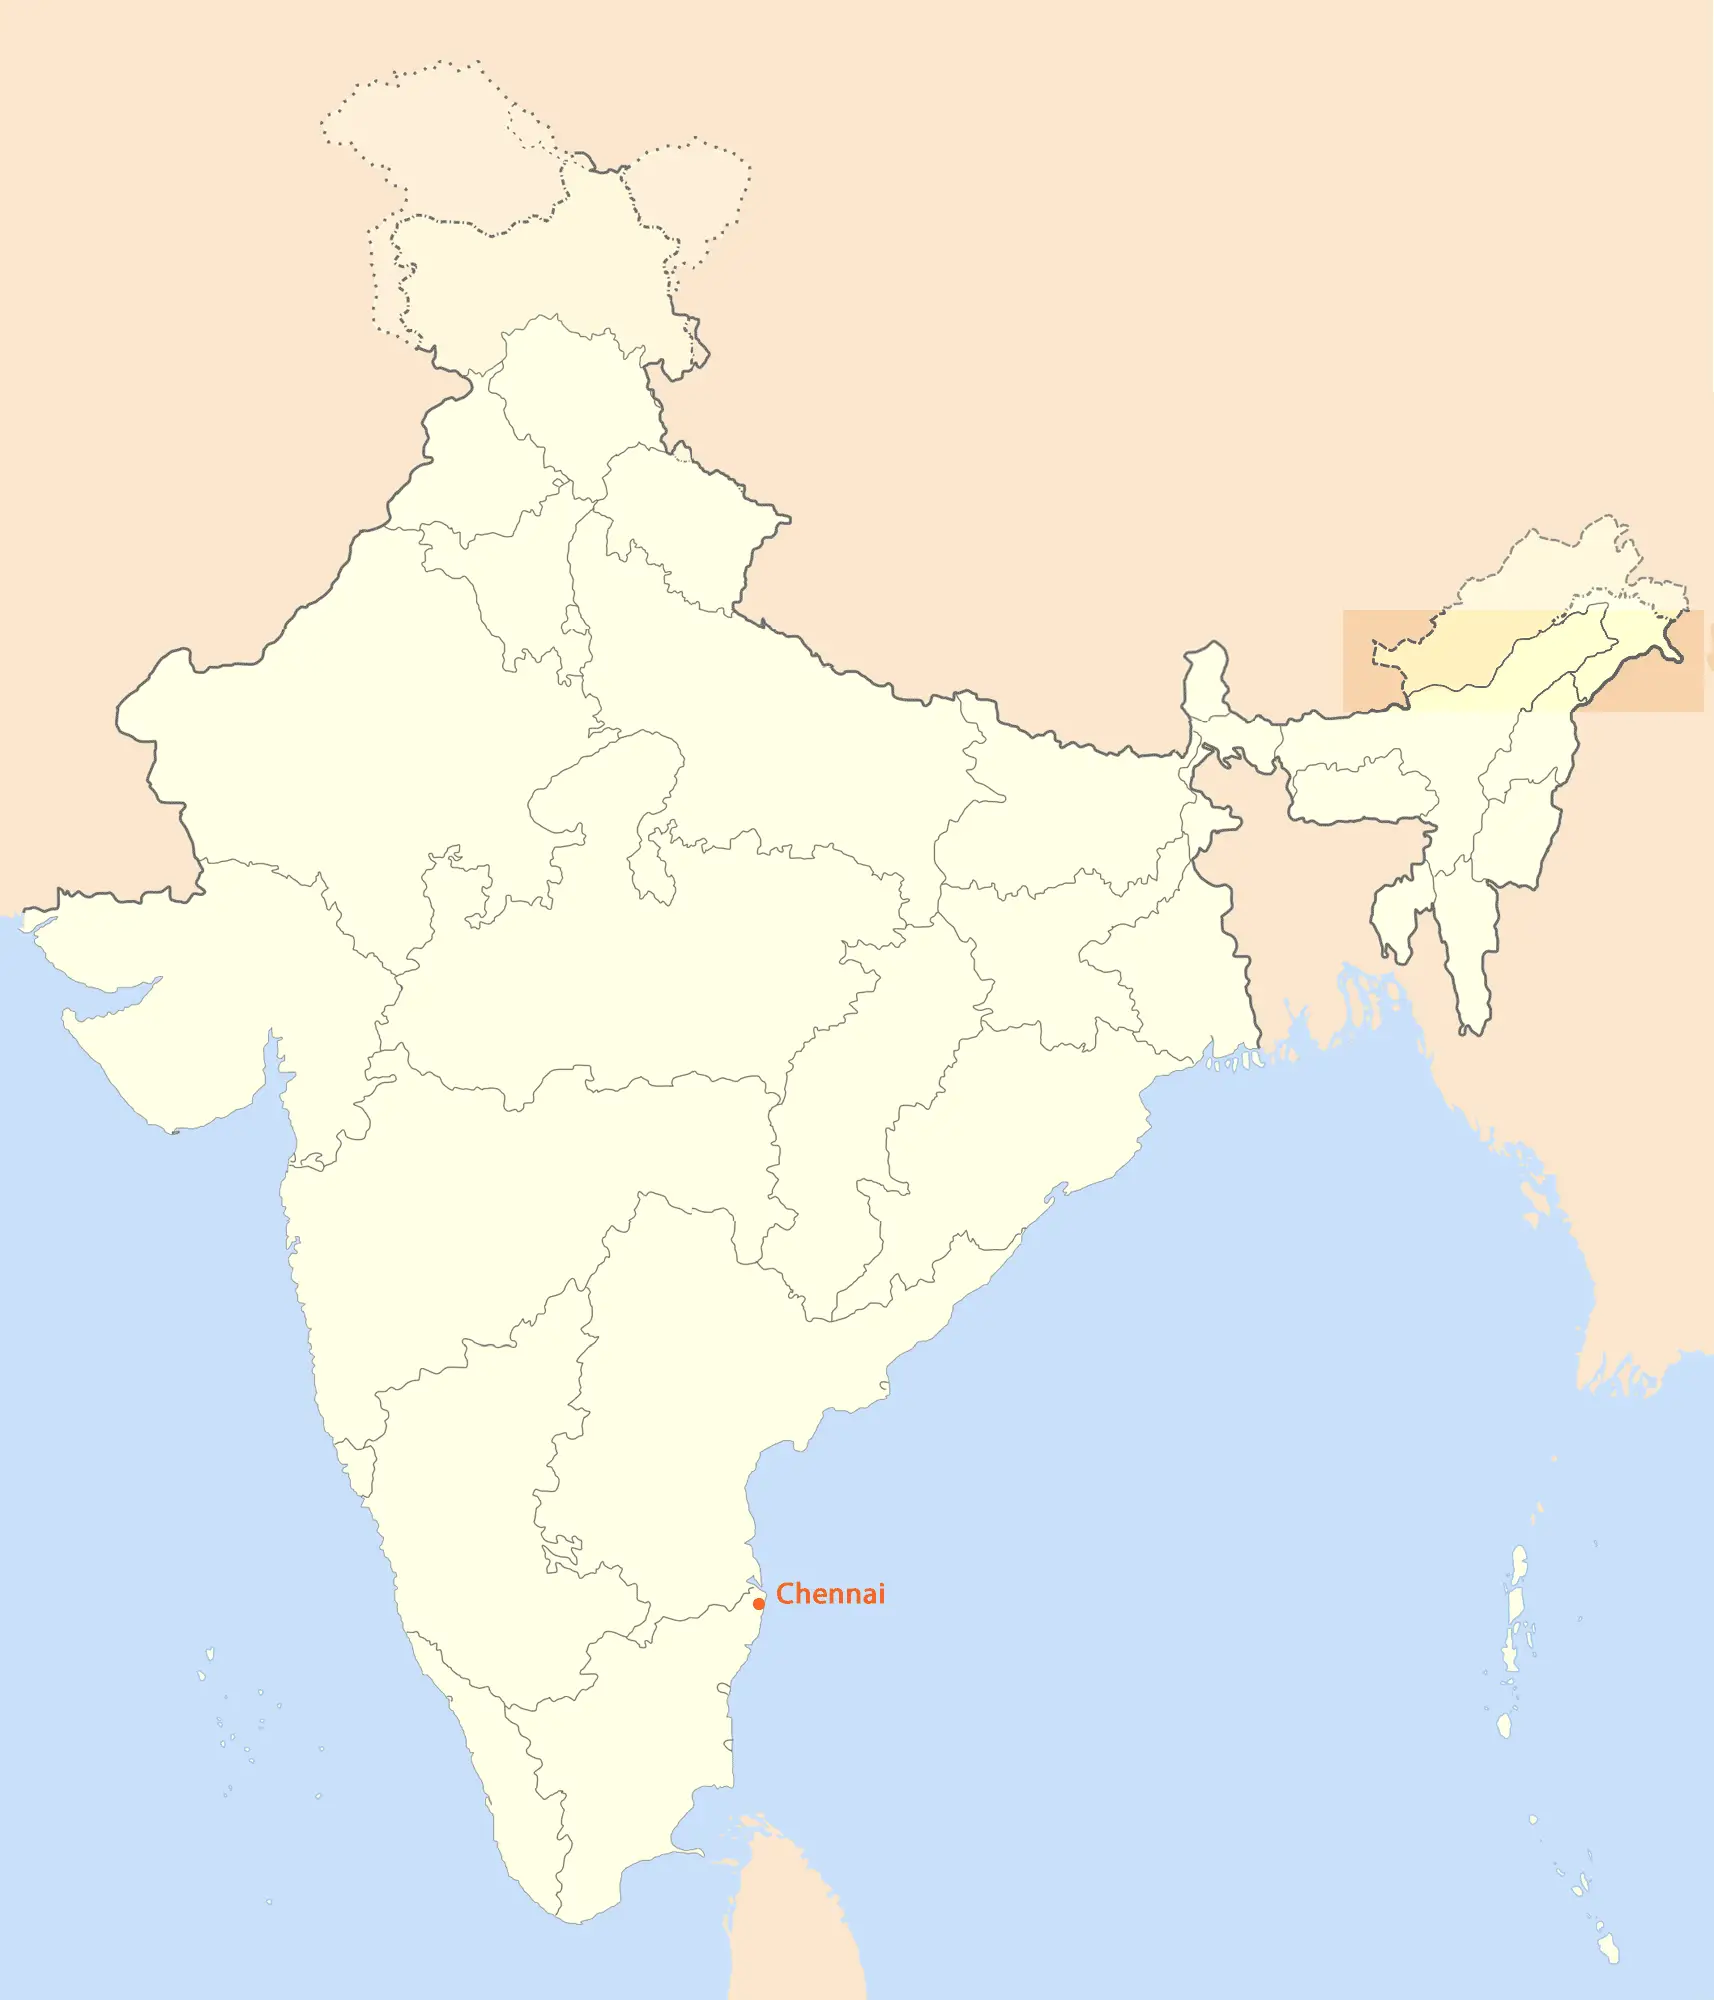 Location Map of Chennai